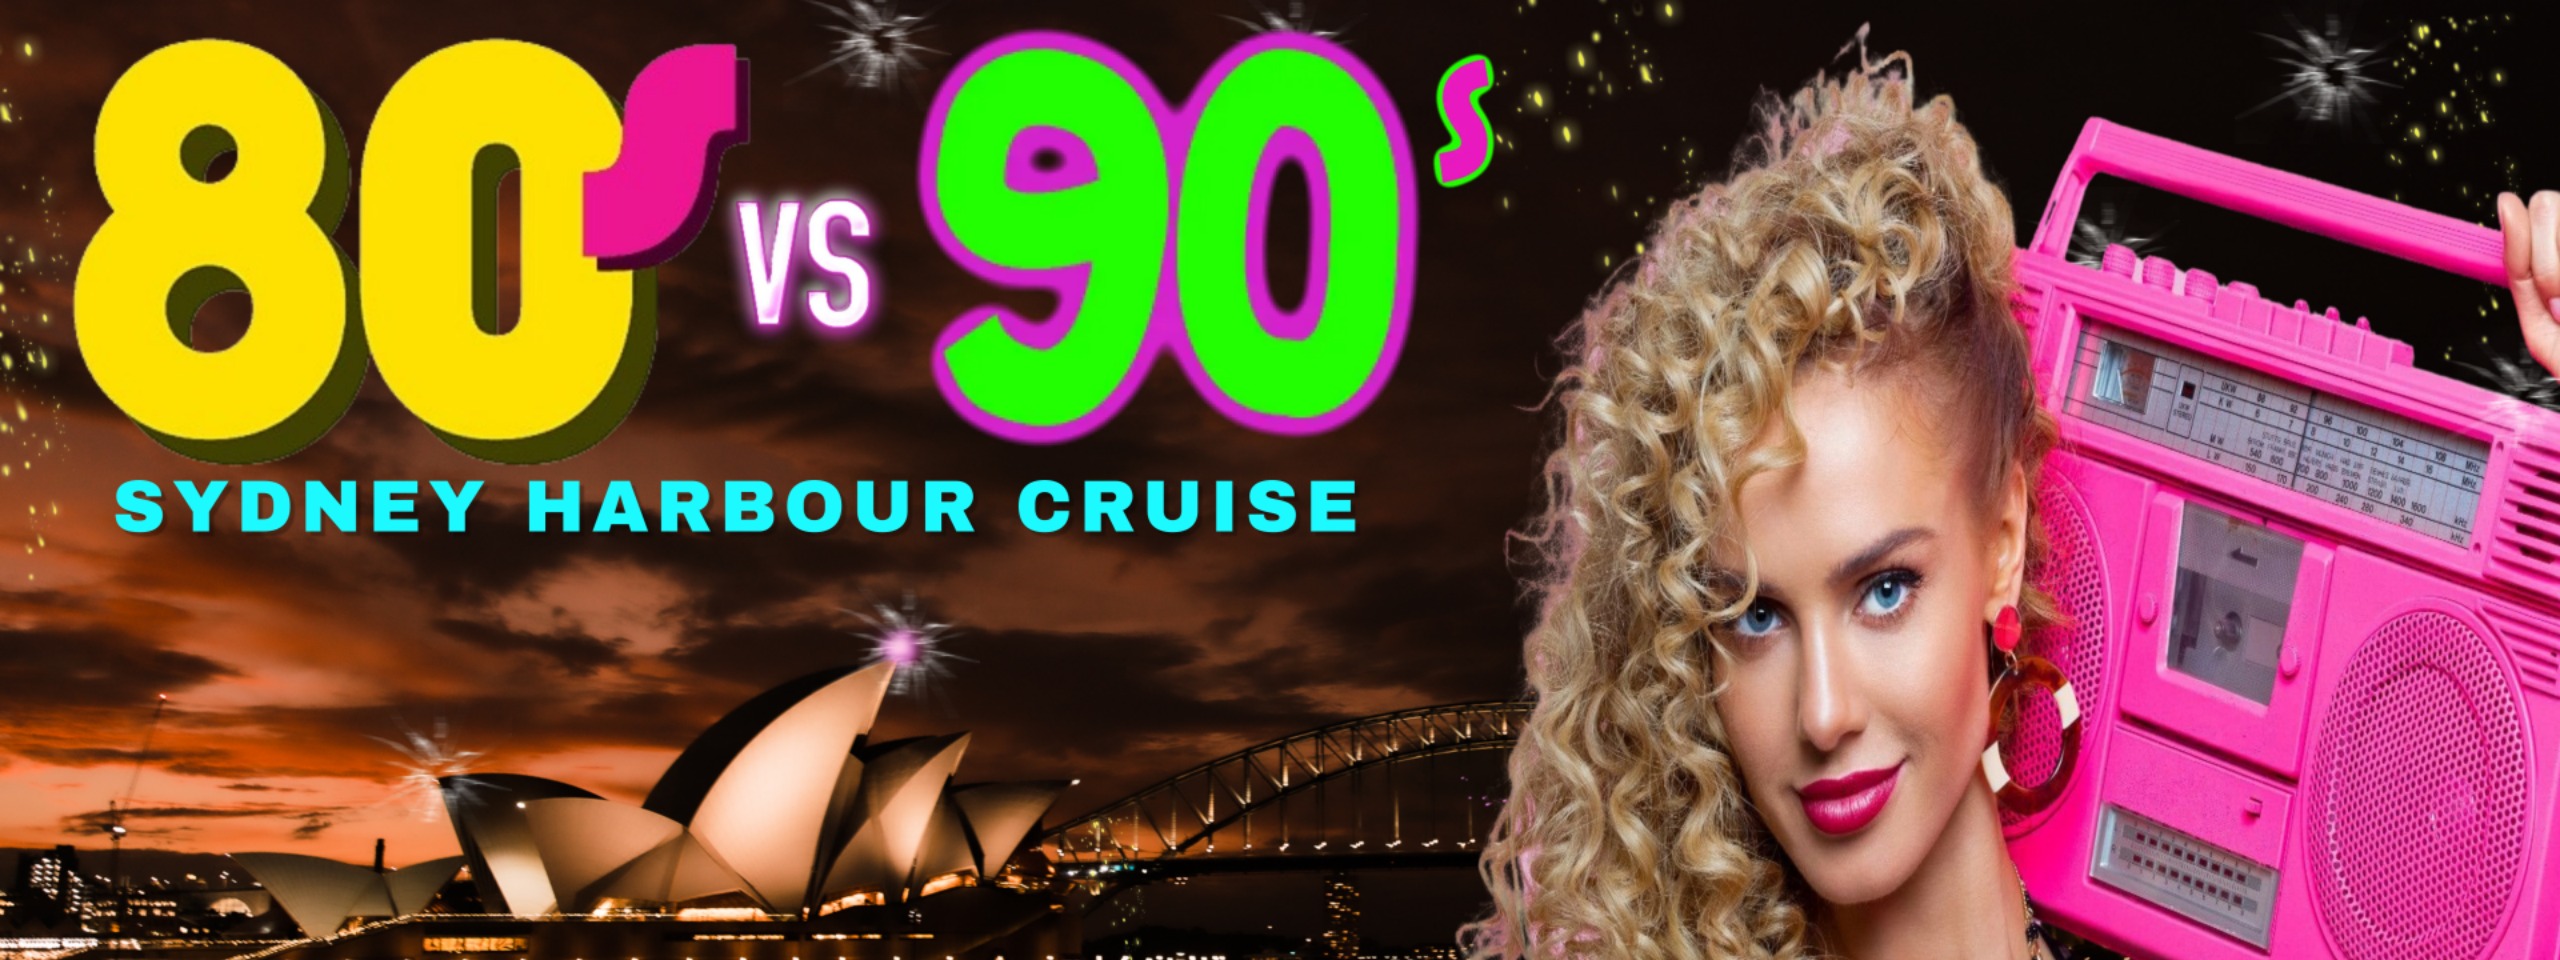 80s dinner cruise sydney